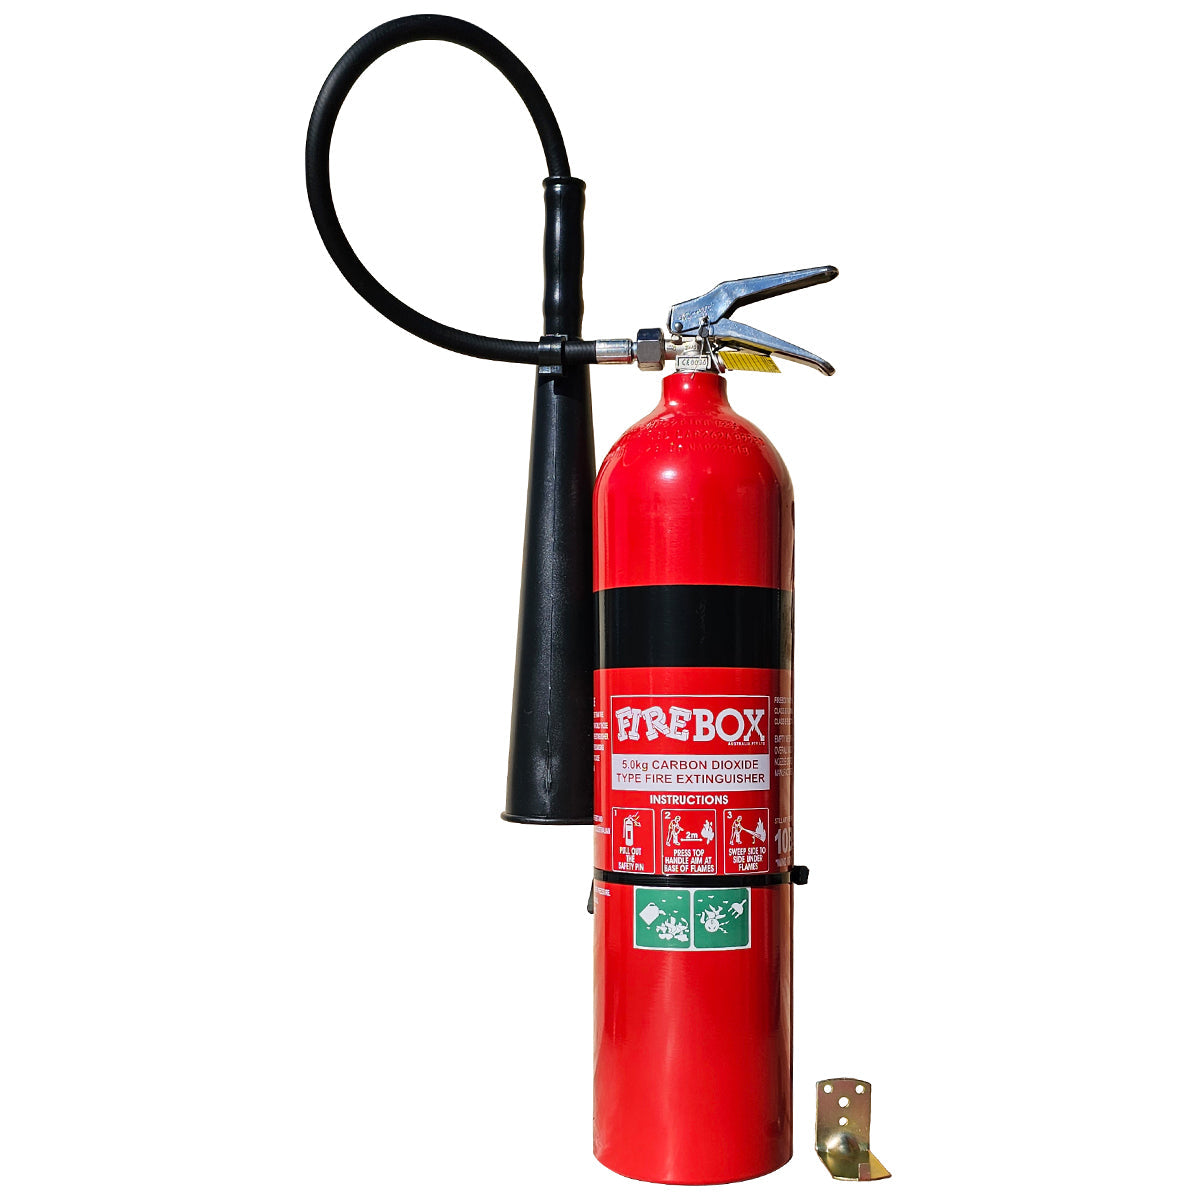 5kg CO2 Extinguisher - Premium CO2 Extinguishers from Firebox - Shop now at Firebox Australia